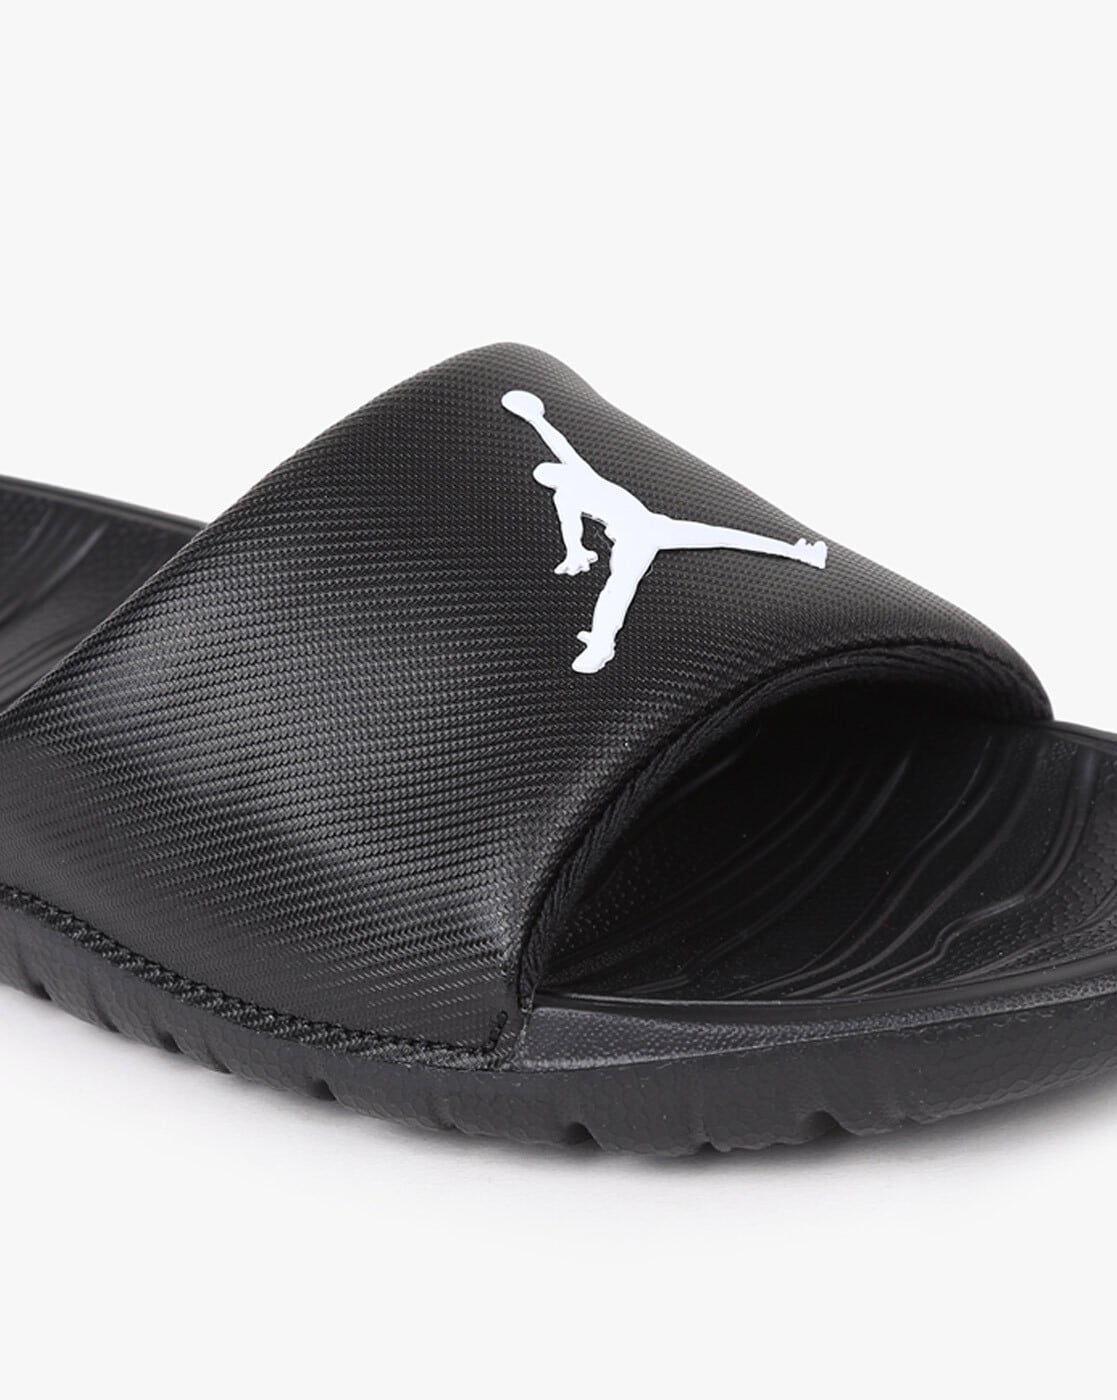 Nike Air Jordan Flip Flop | peacecommission.kdsg.gov.ng